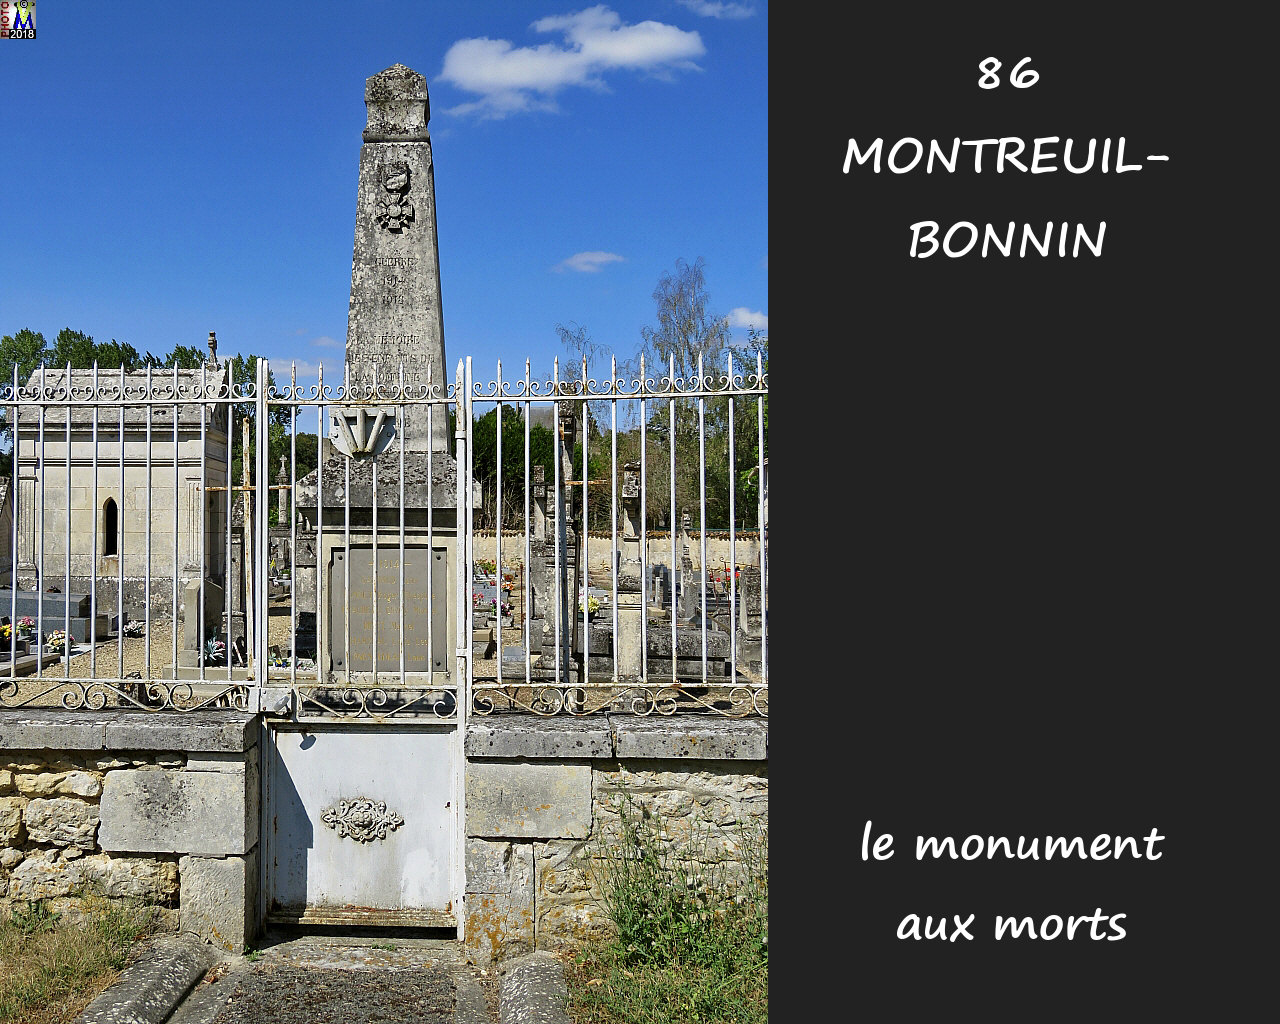 86MONTREUIL-BONNIN_morts_1000.jpg